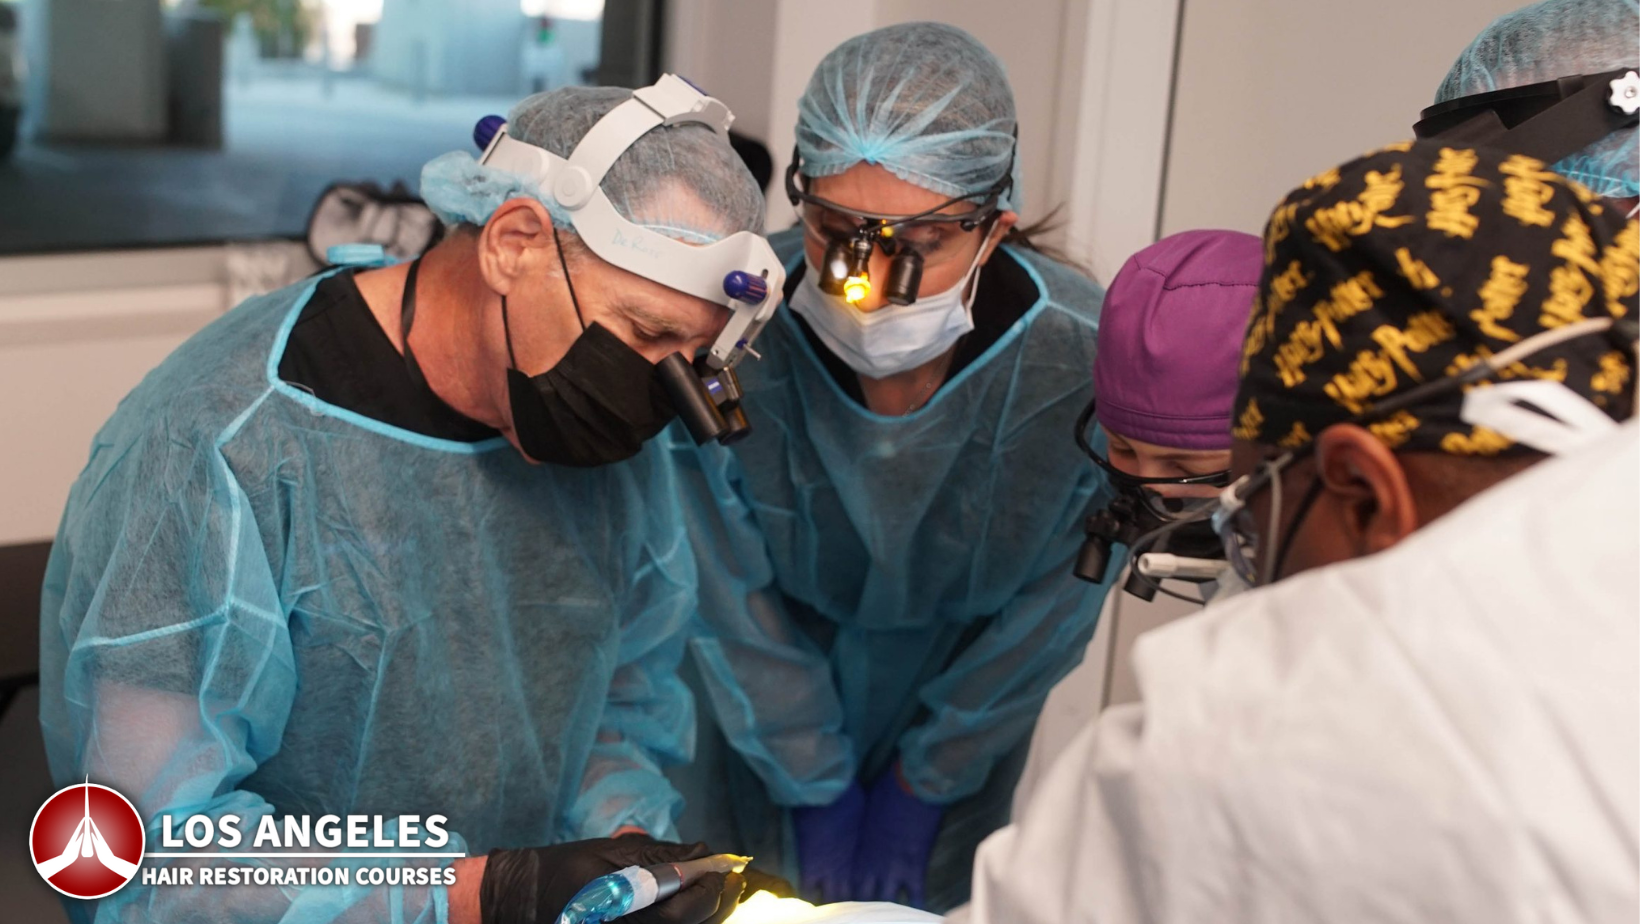 Los Angeles Hair Restoration Courses 2022 - Hands on Cadaver Lab Workshop FUE Hair Transplant